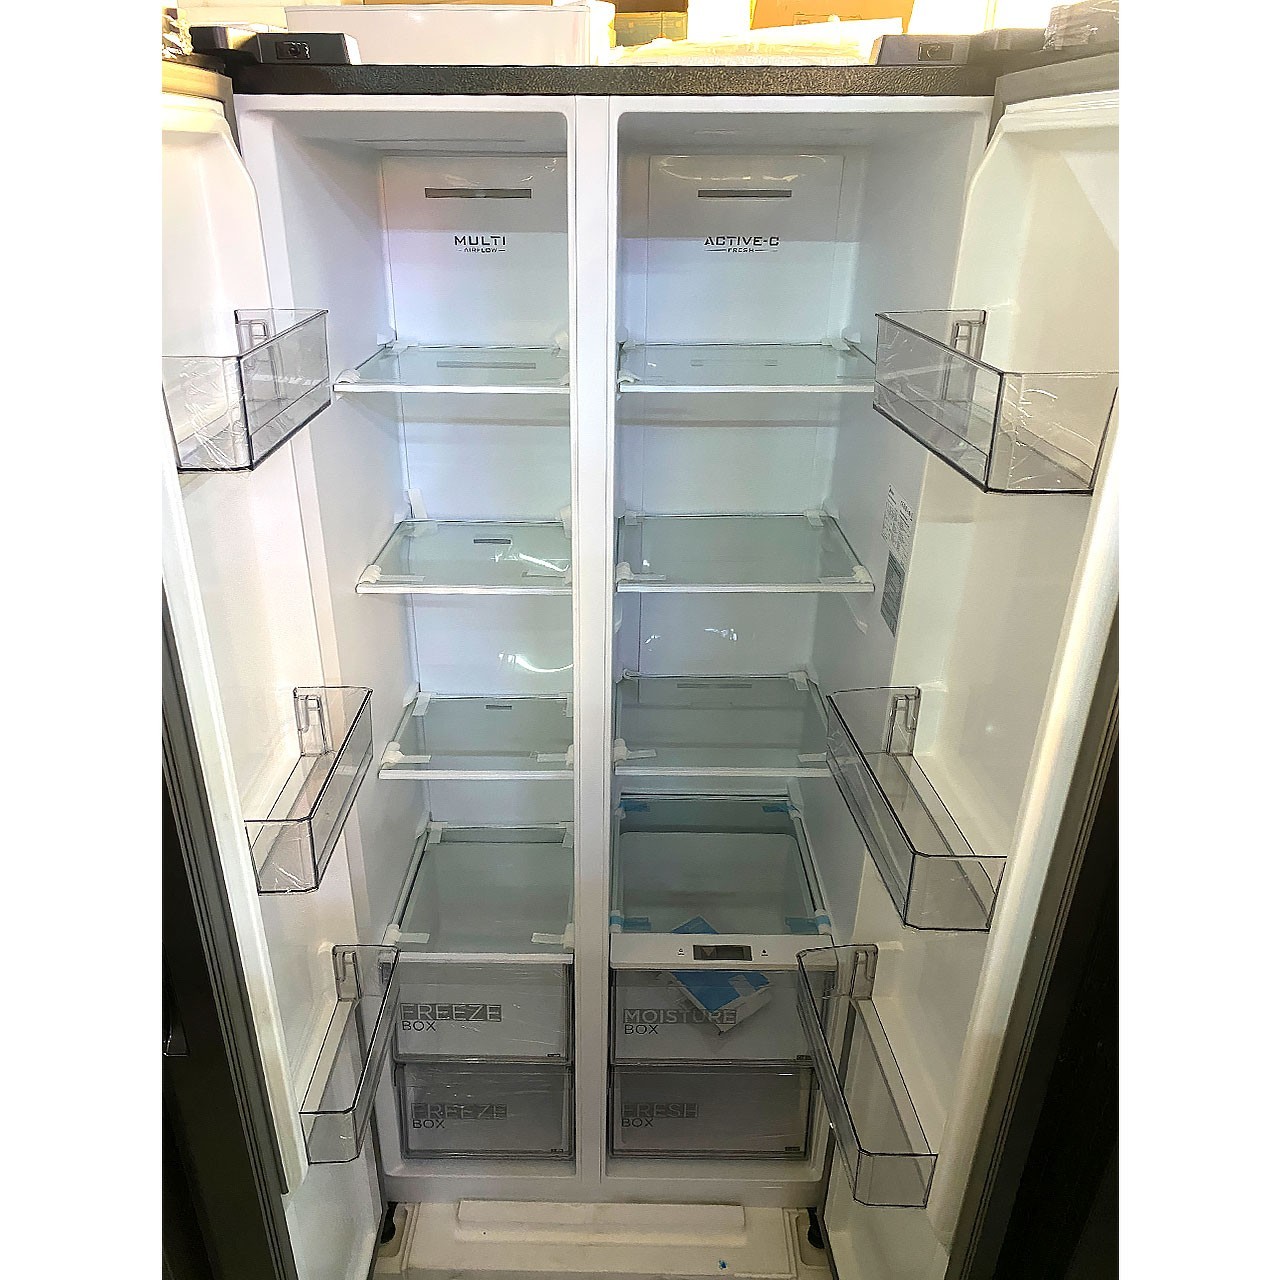 Холодильник side-by-side Midea 460 литров